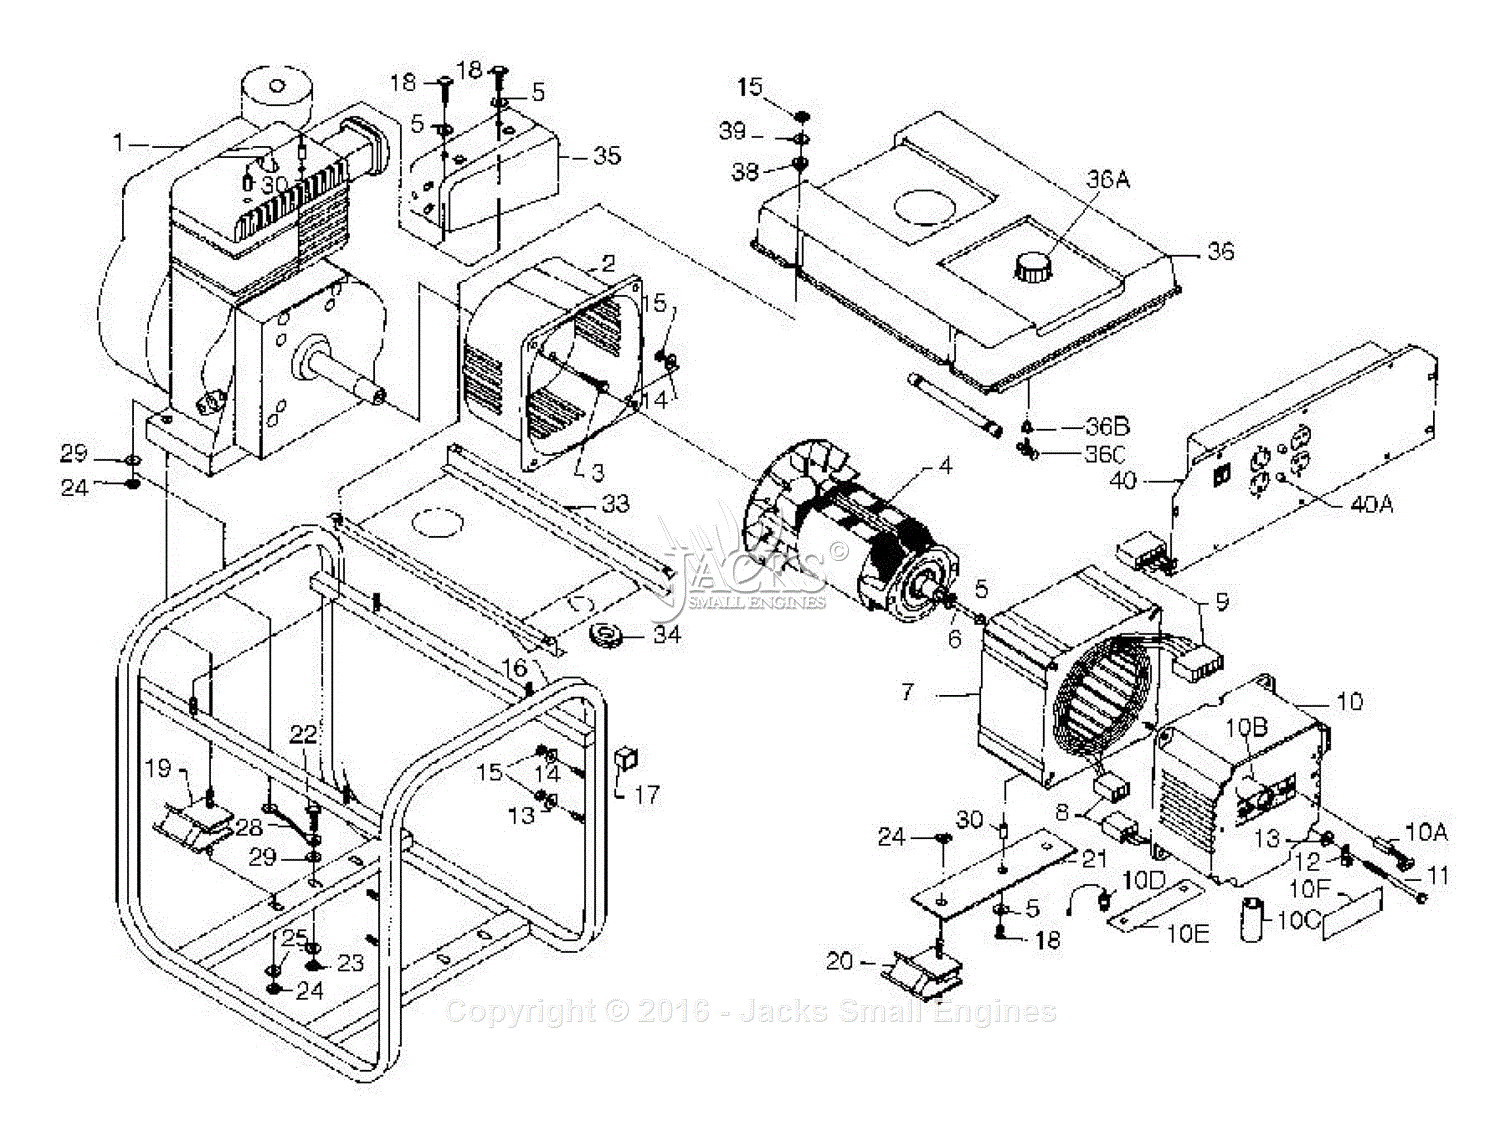 pm0495501.17 wiring diagram